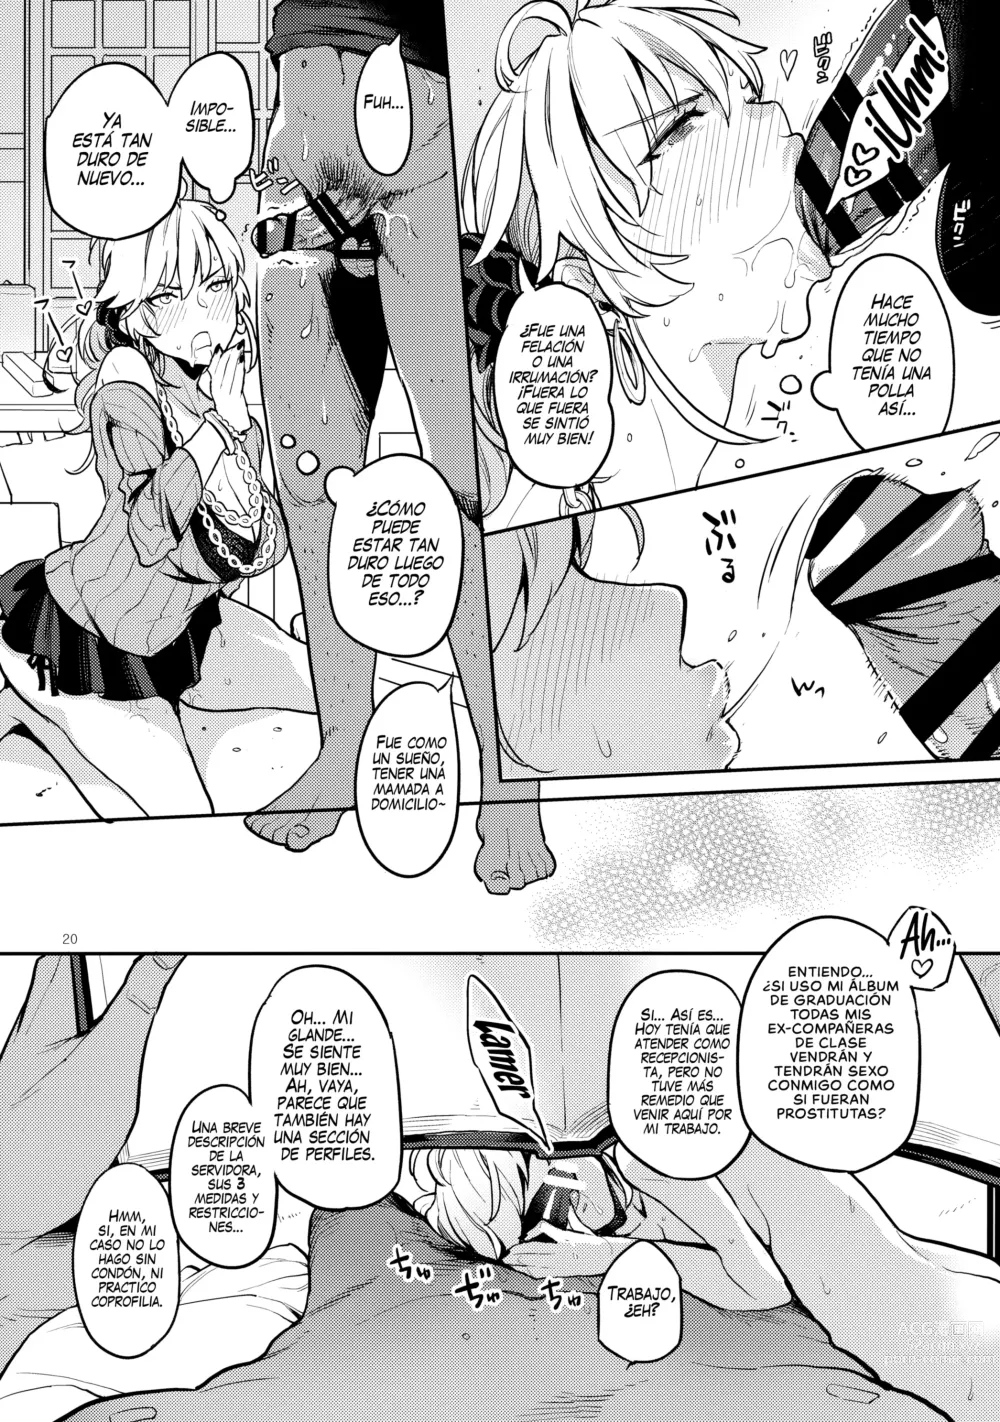 Page 19 of doujinshi Prostitutas de Clase